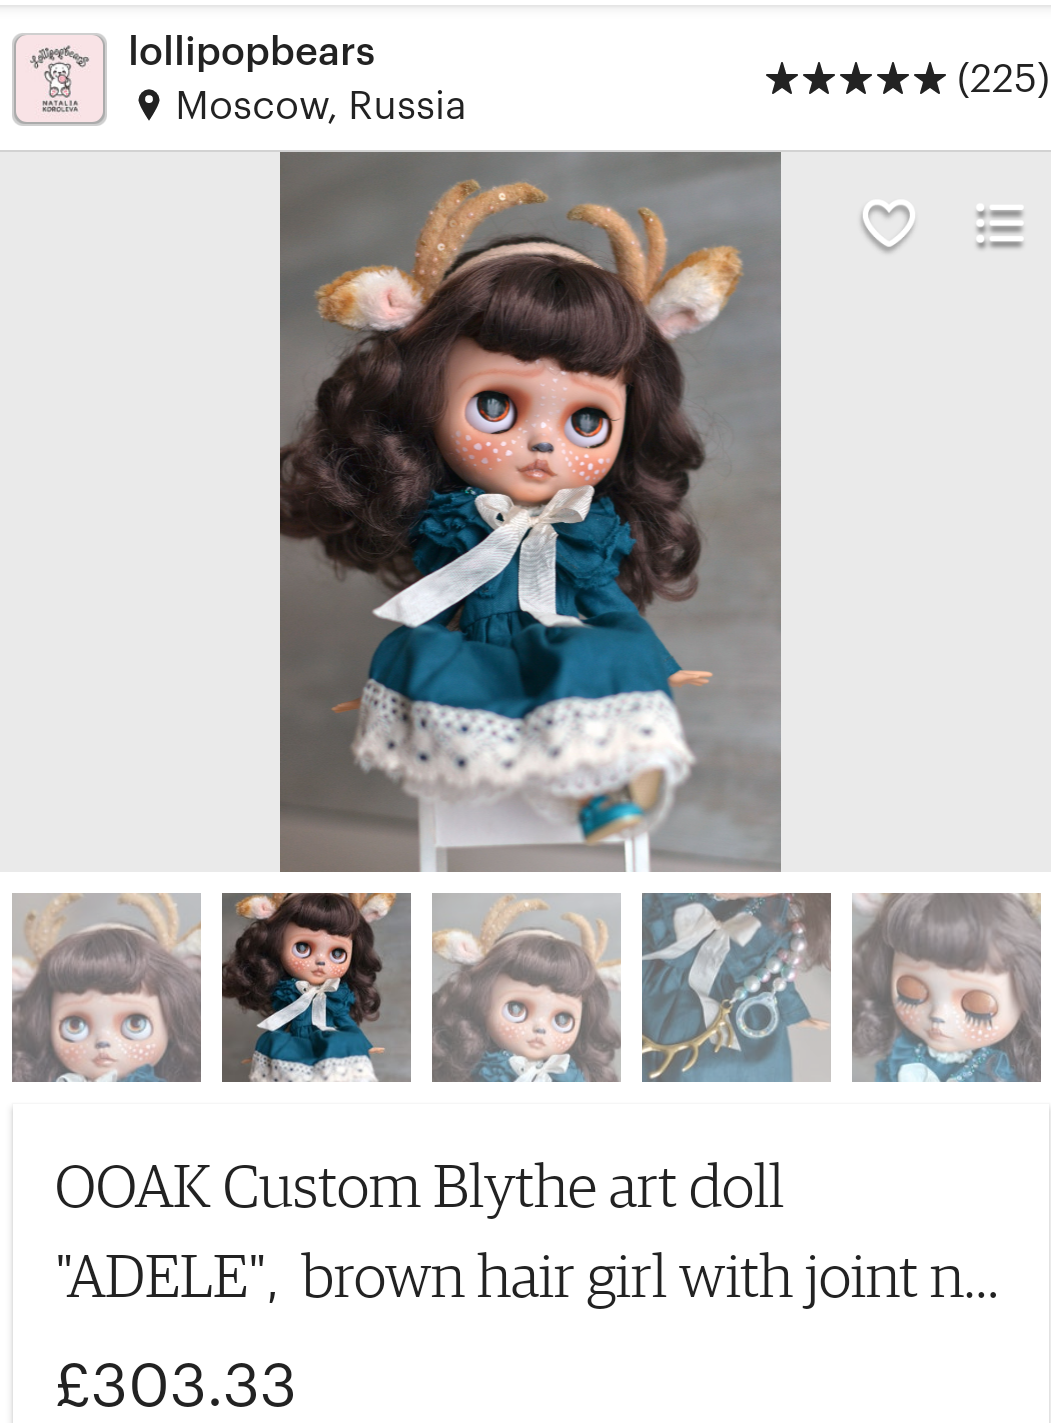 Lolipopbears Etsy Listing for their custom Blythe doll